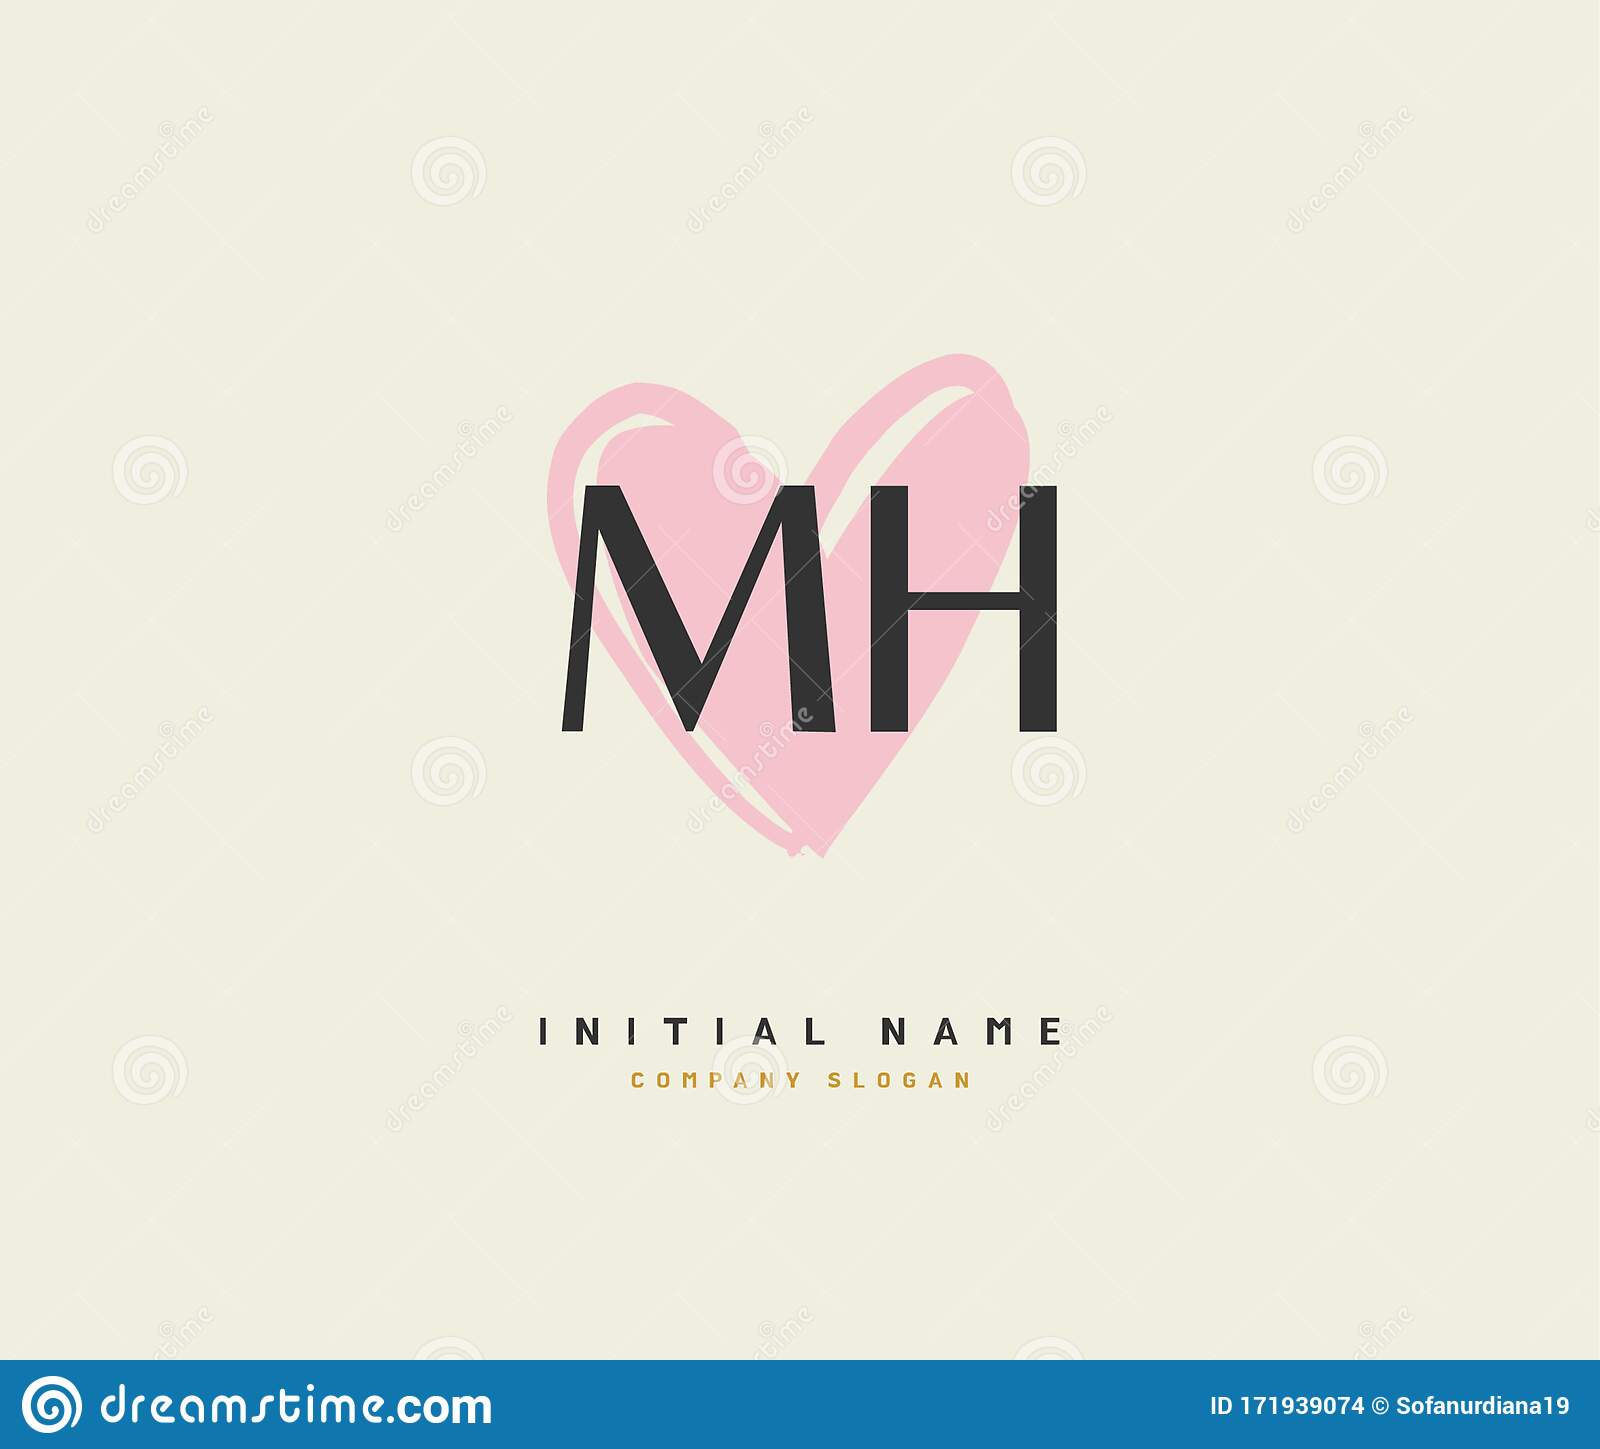 MH Cosmetics Co.